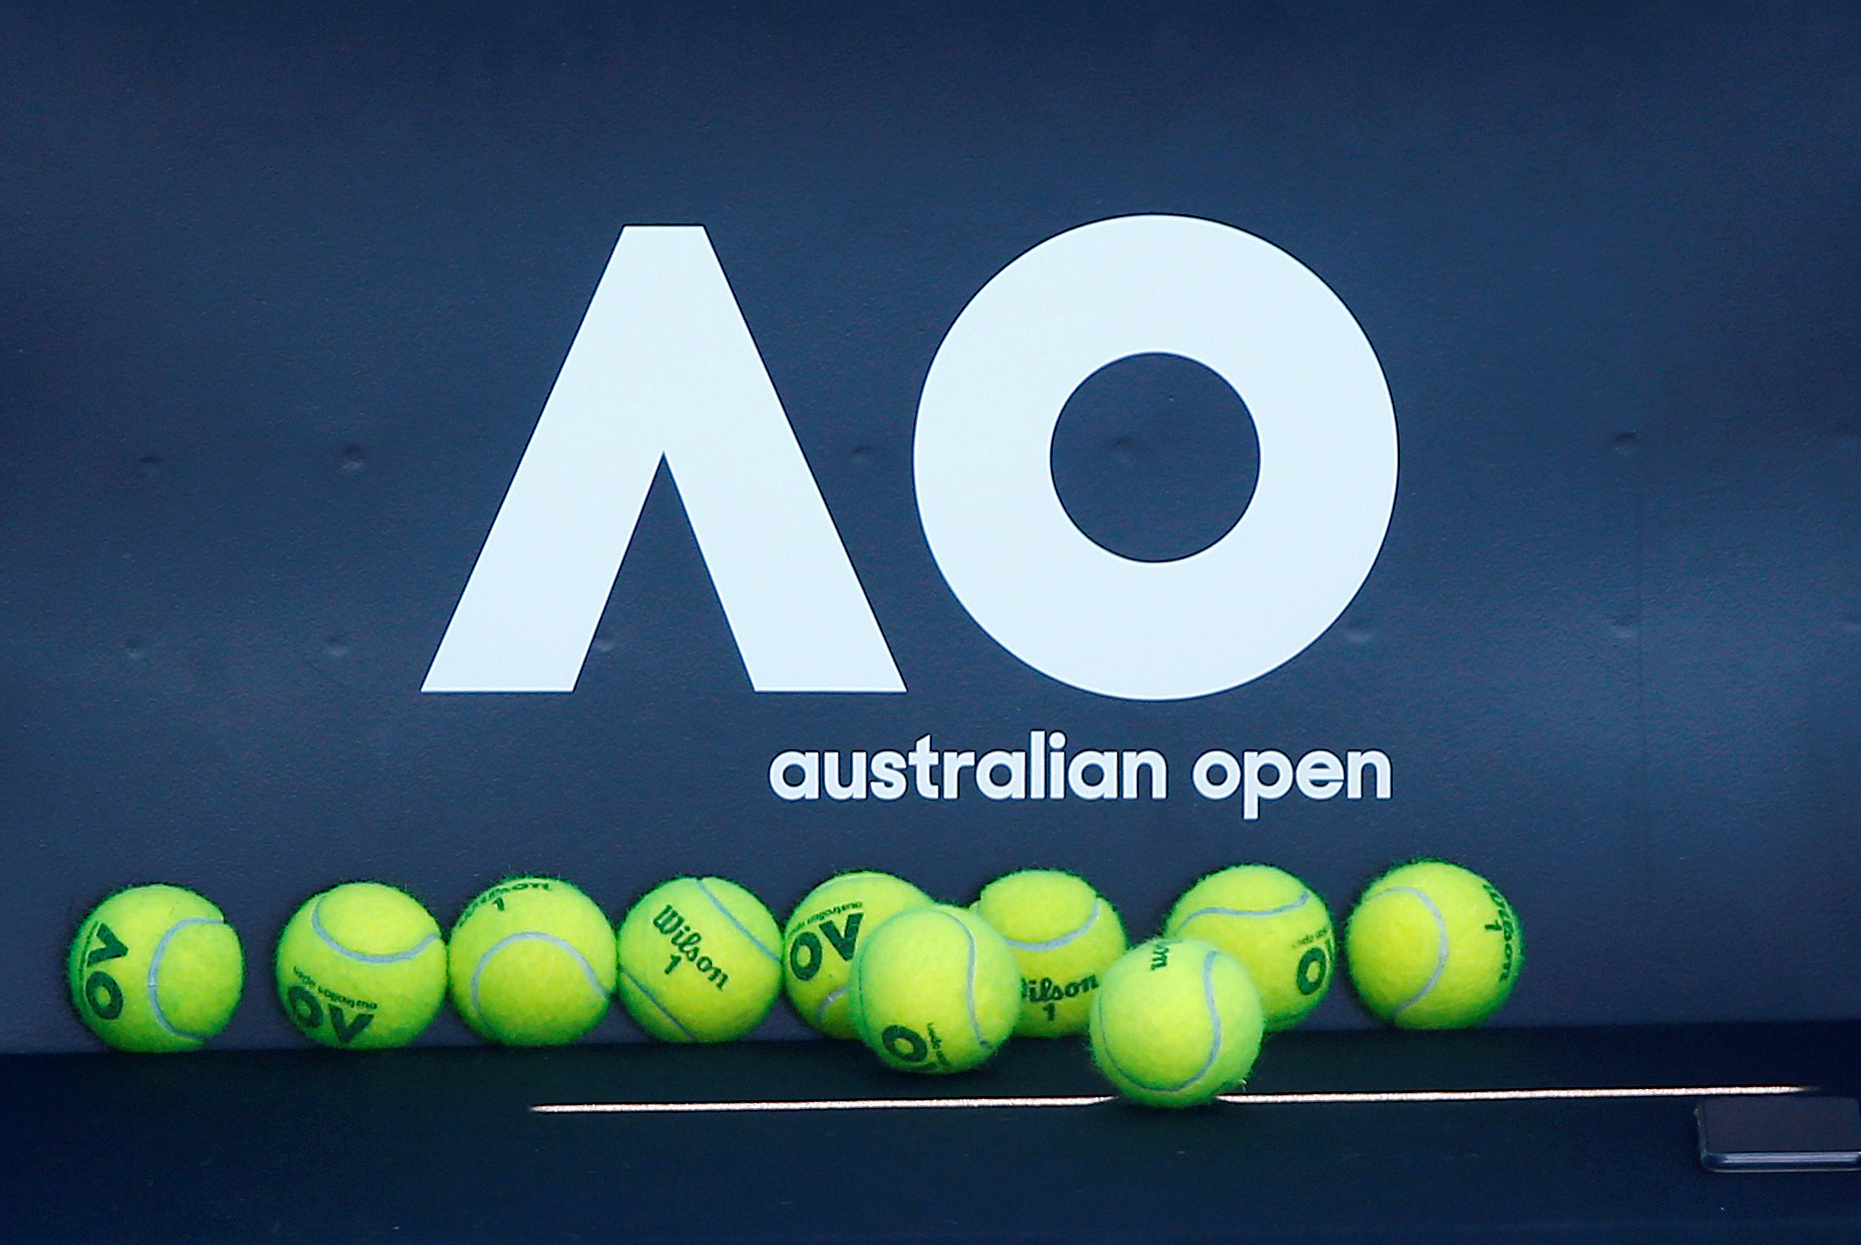 FILE PHOTO: Tennis - Australian Open - Melbourne, Australia, January 14, 2018. Tennis balls are pictured in front of the Australian Open logo before the tennis tournament. REUTERS/Thomas Peter